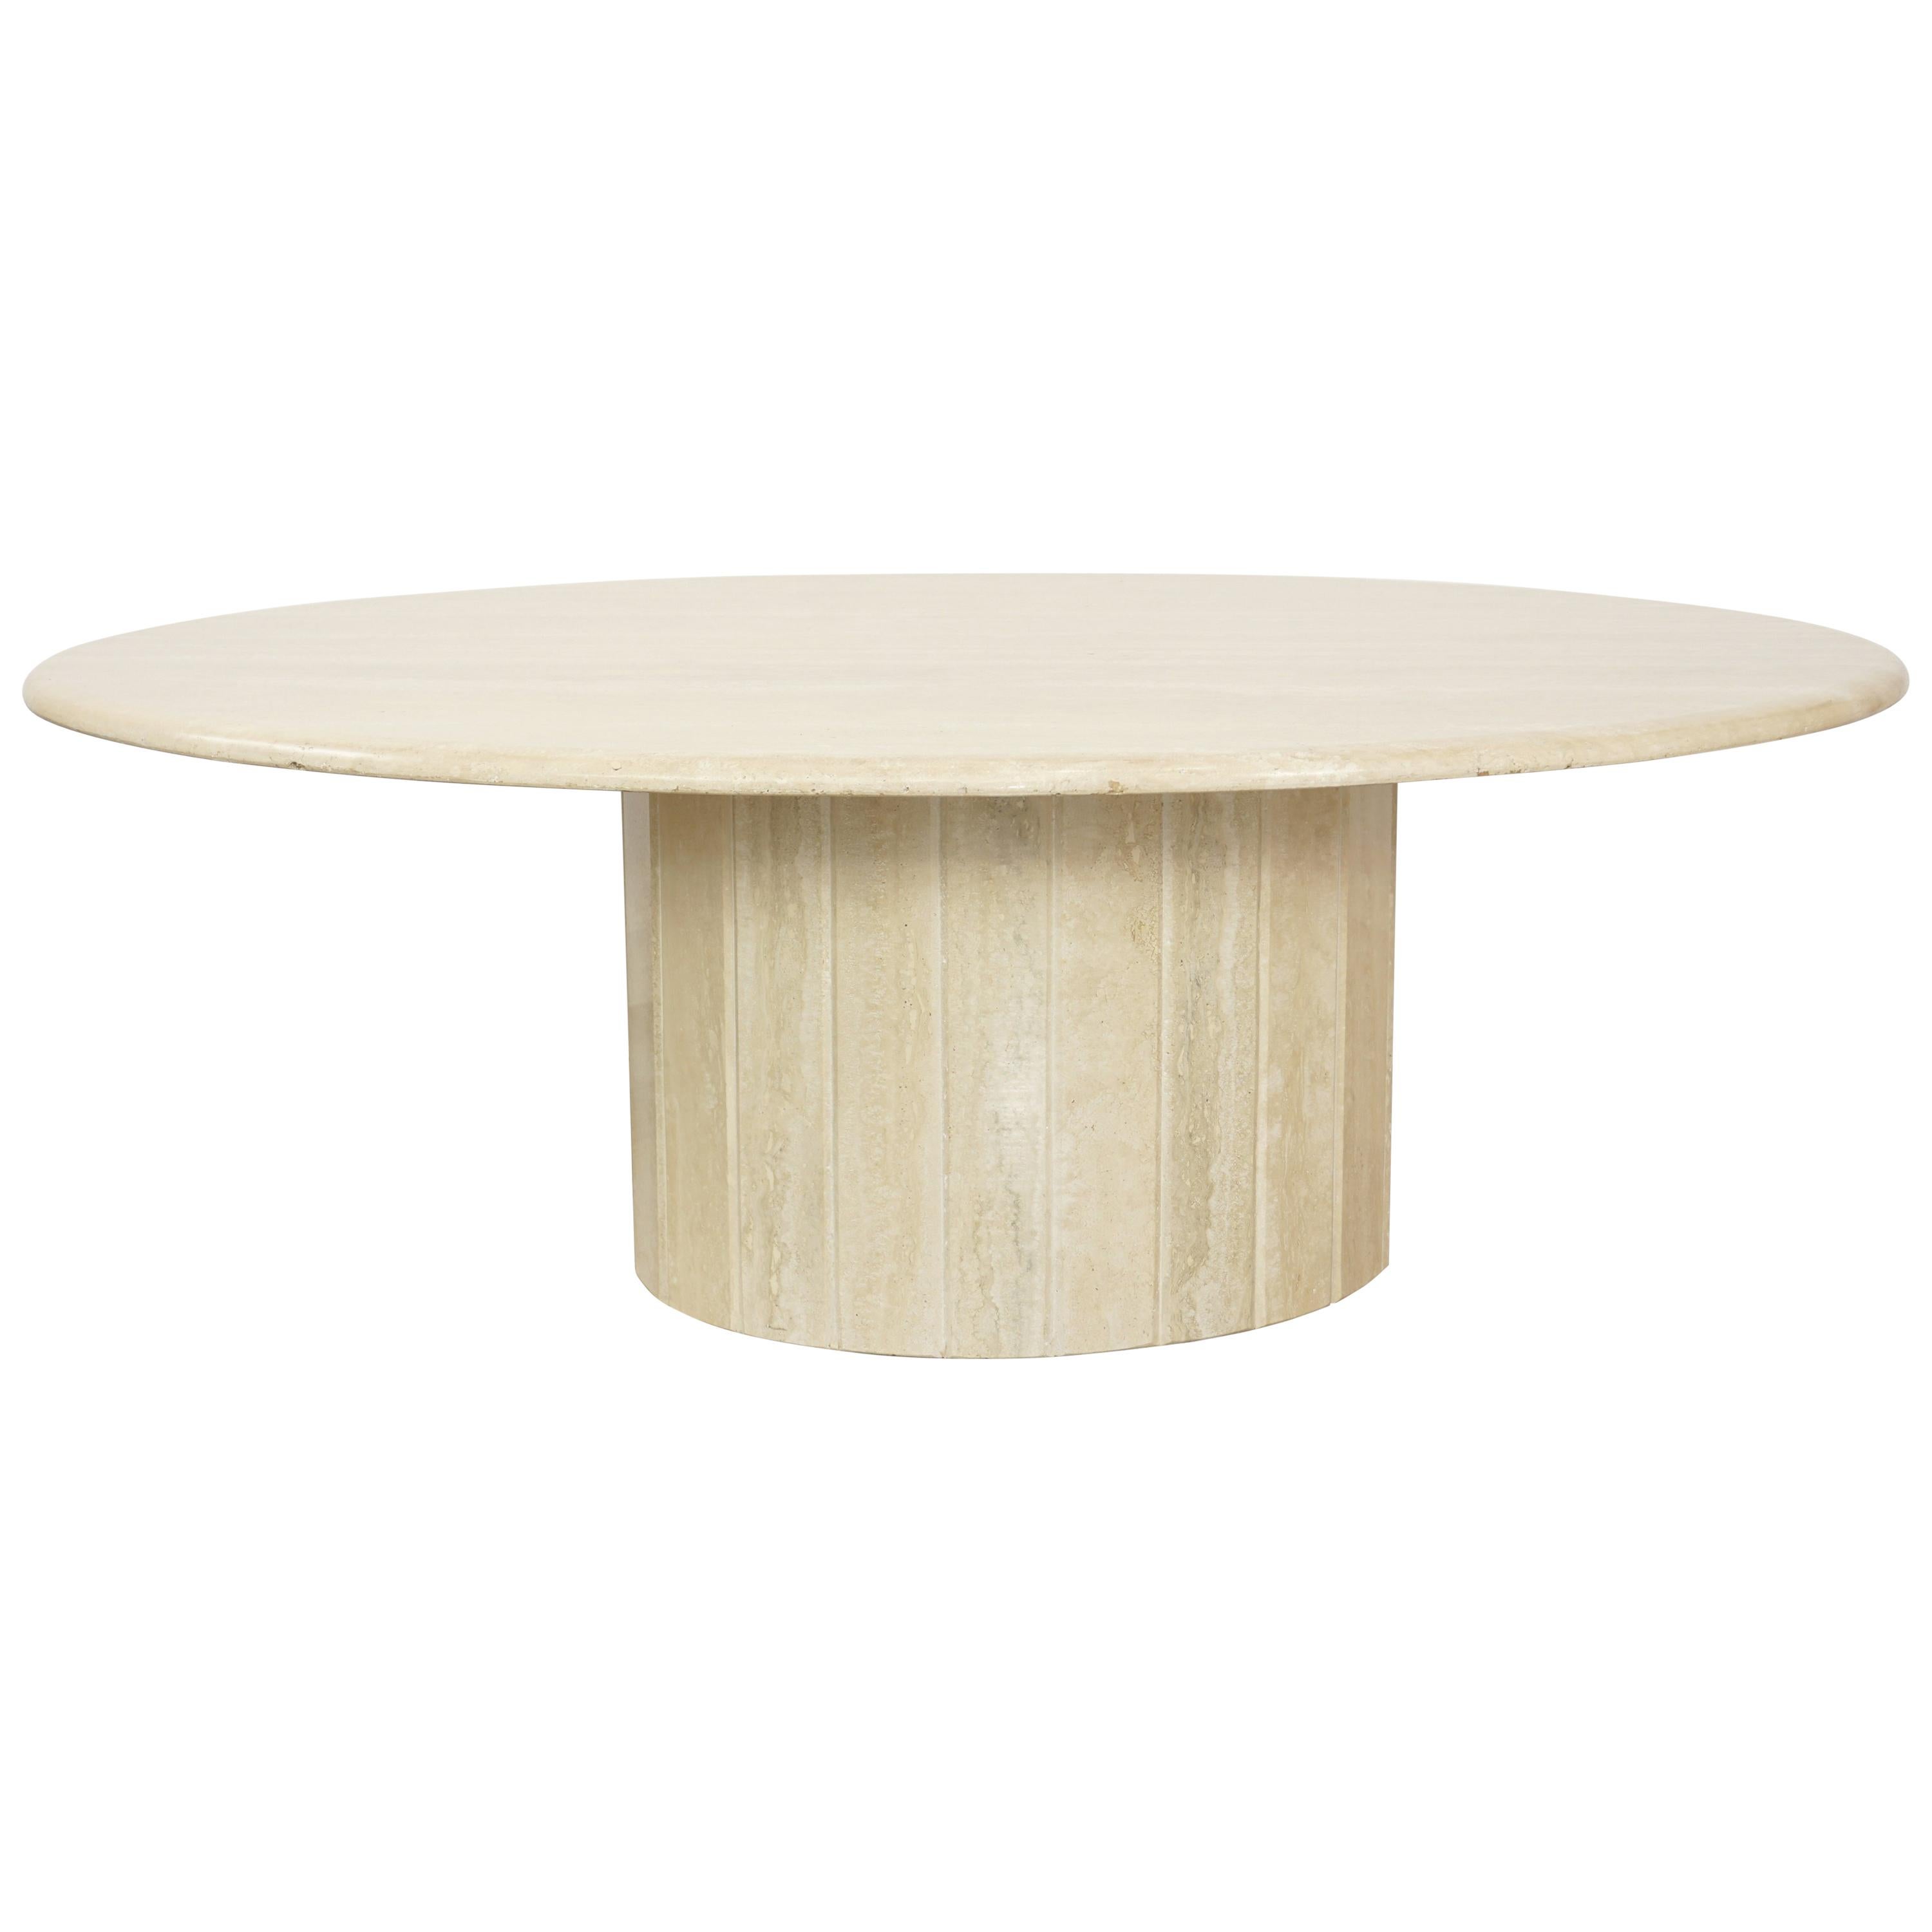 Travertine Italian Design Elliptical Coffee Table Hollywood Regency Style